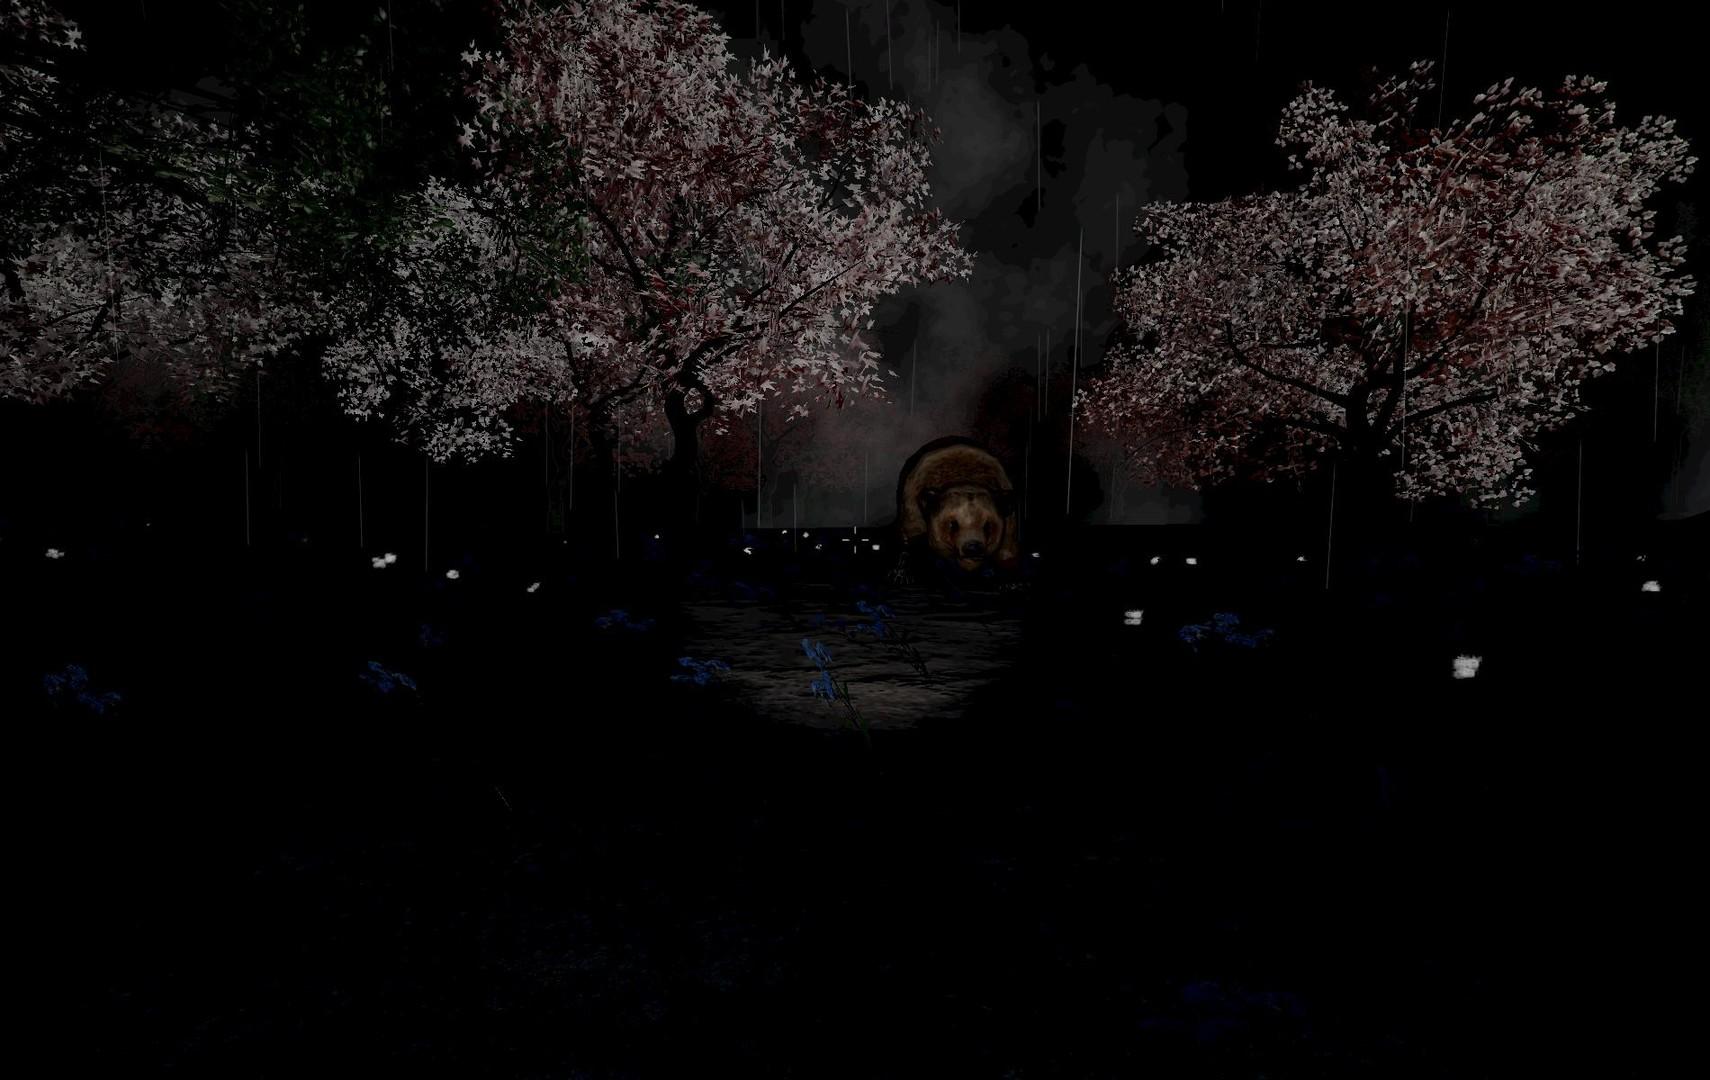 Screenshot №5 from game Red Wake Carnage